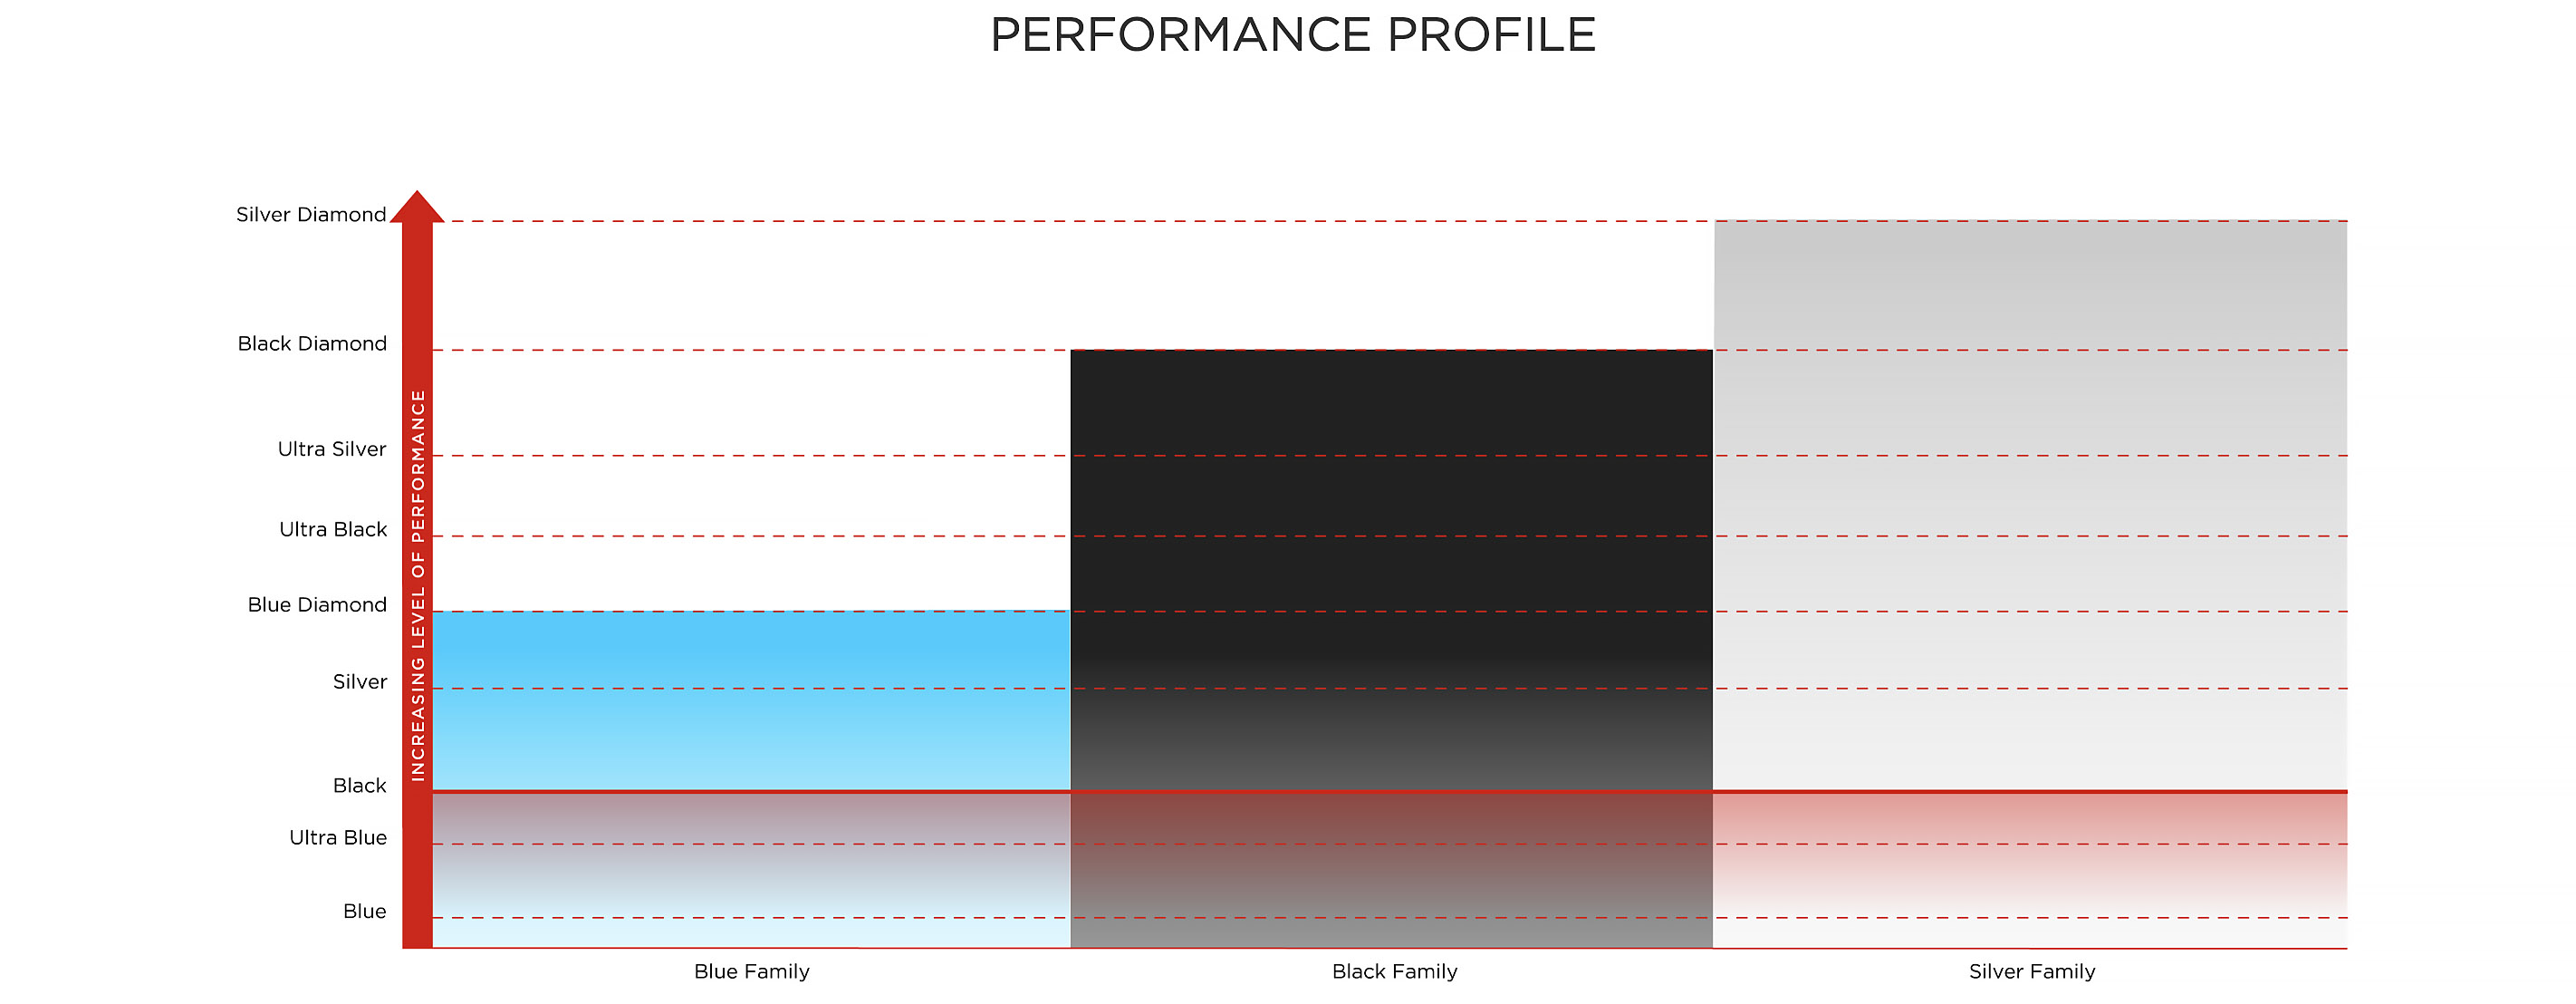 Black-power-cable-performance-profile.jp